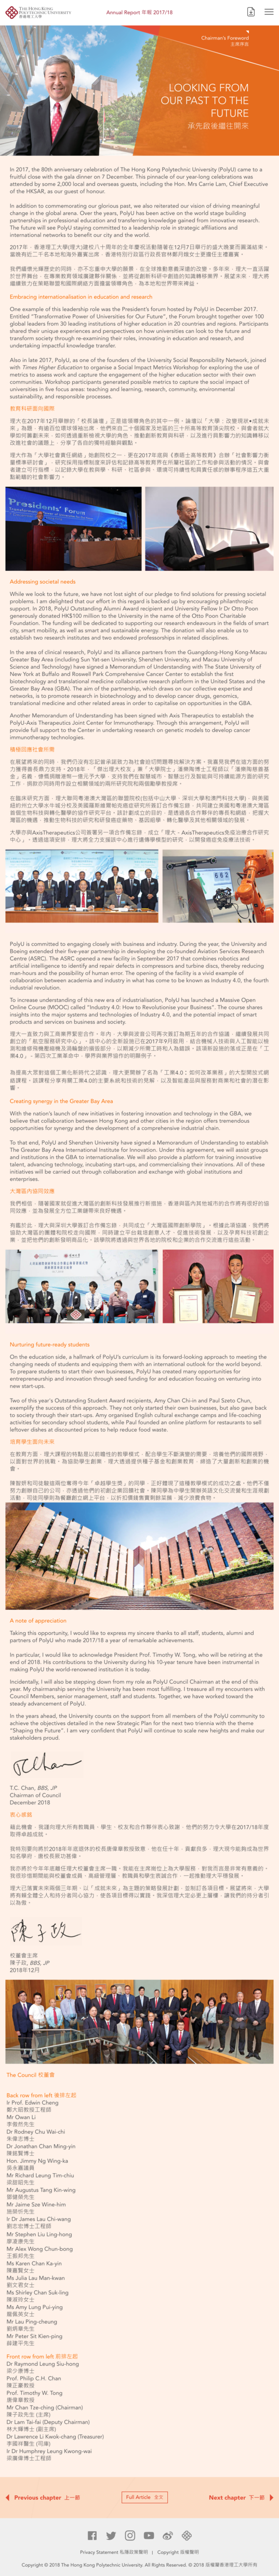 Hong Kong Polytechnic University website screenshot for tablet version 4 of 4